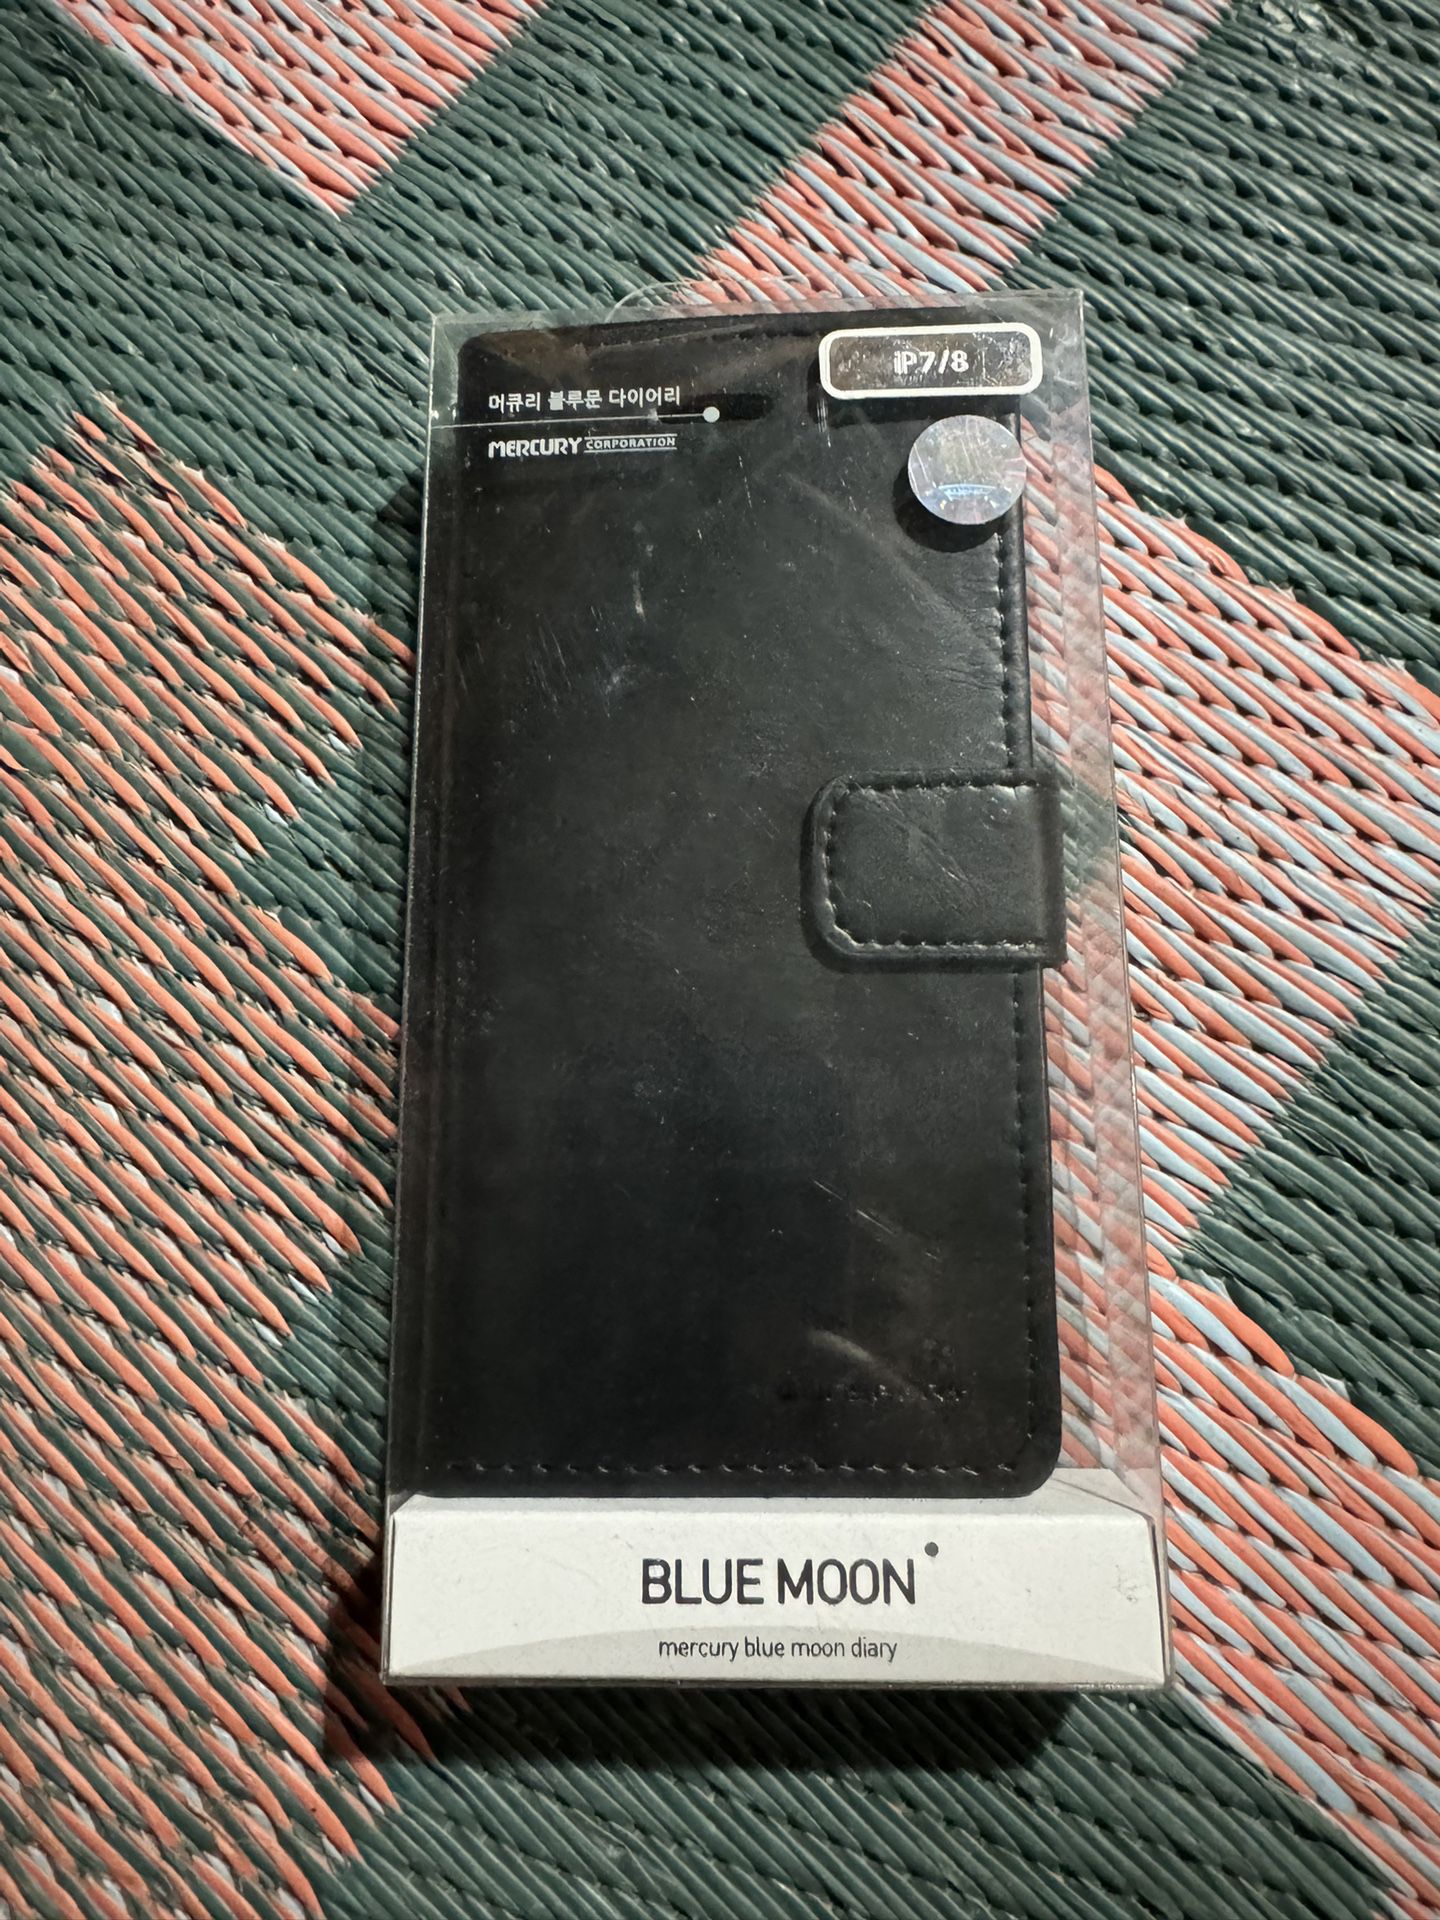 New! Blue Moon Black 7/8 iPhone Case